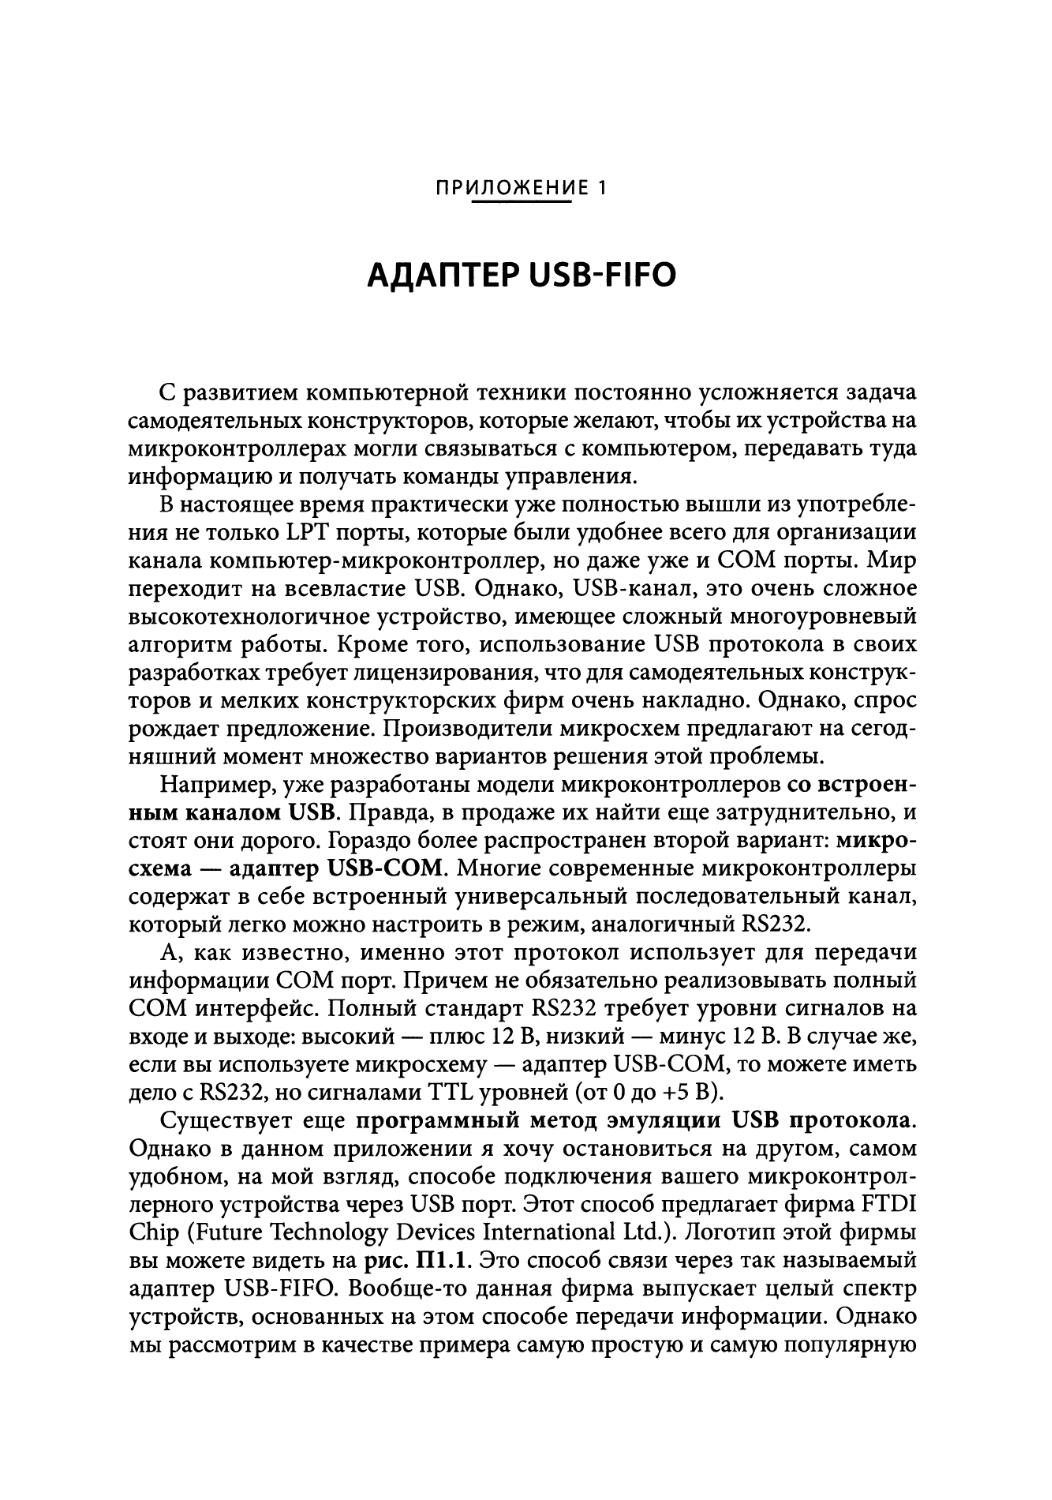 Приложение 1. Адаптер USB-FIFO